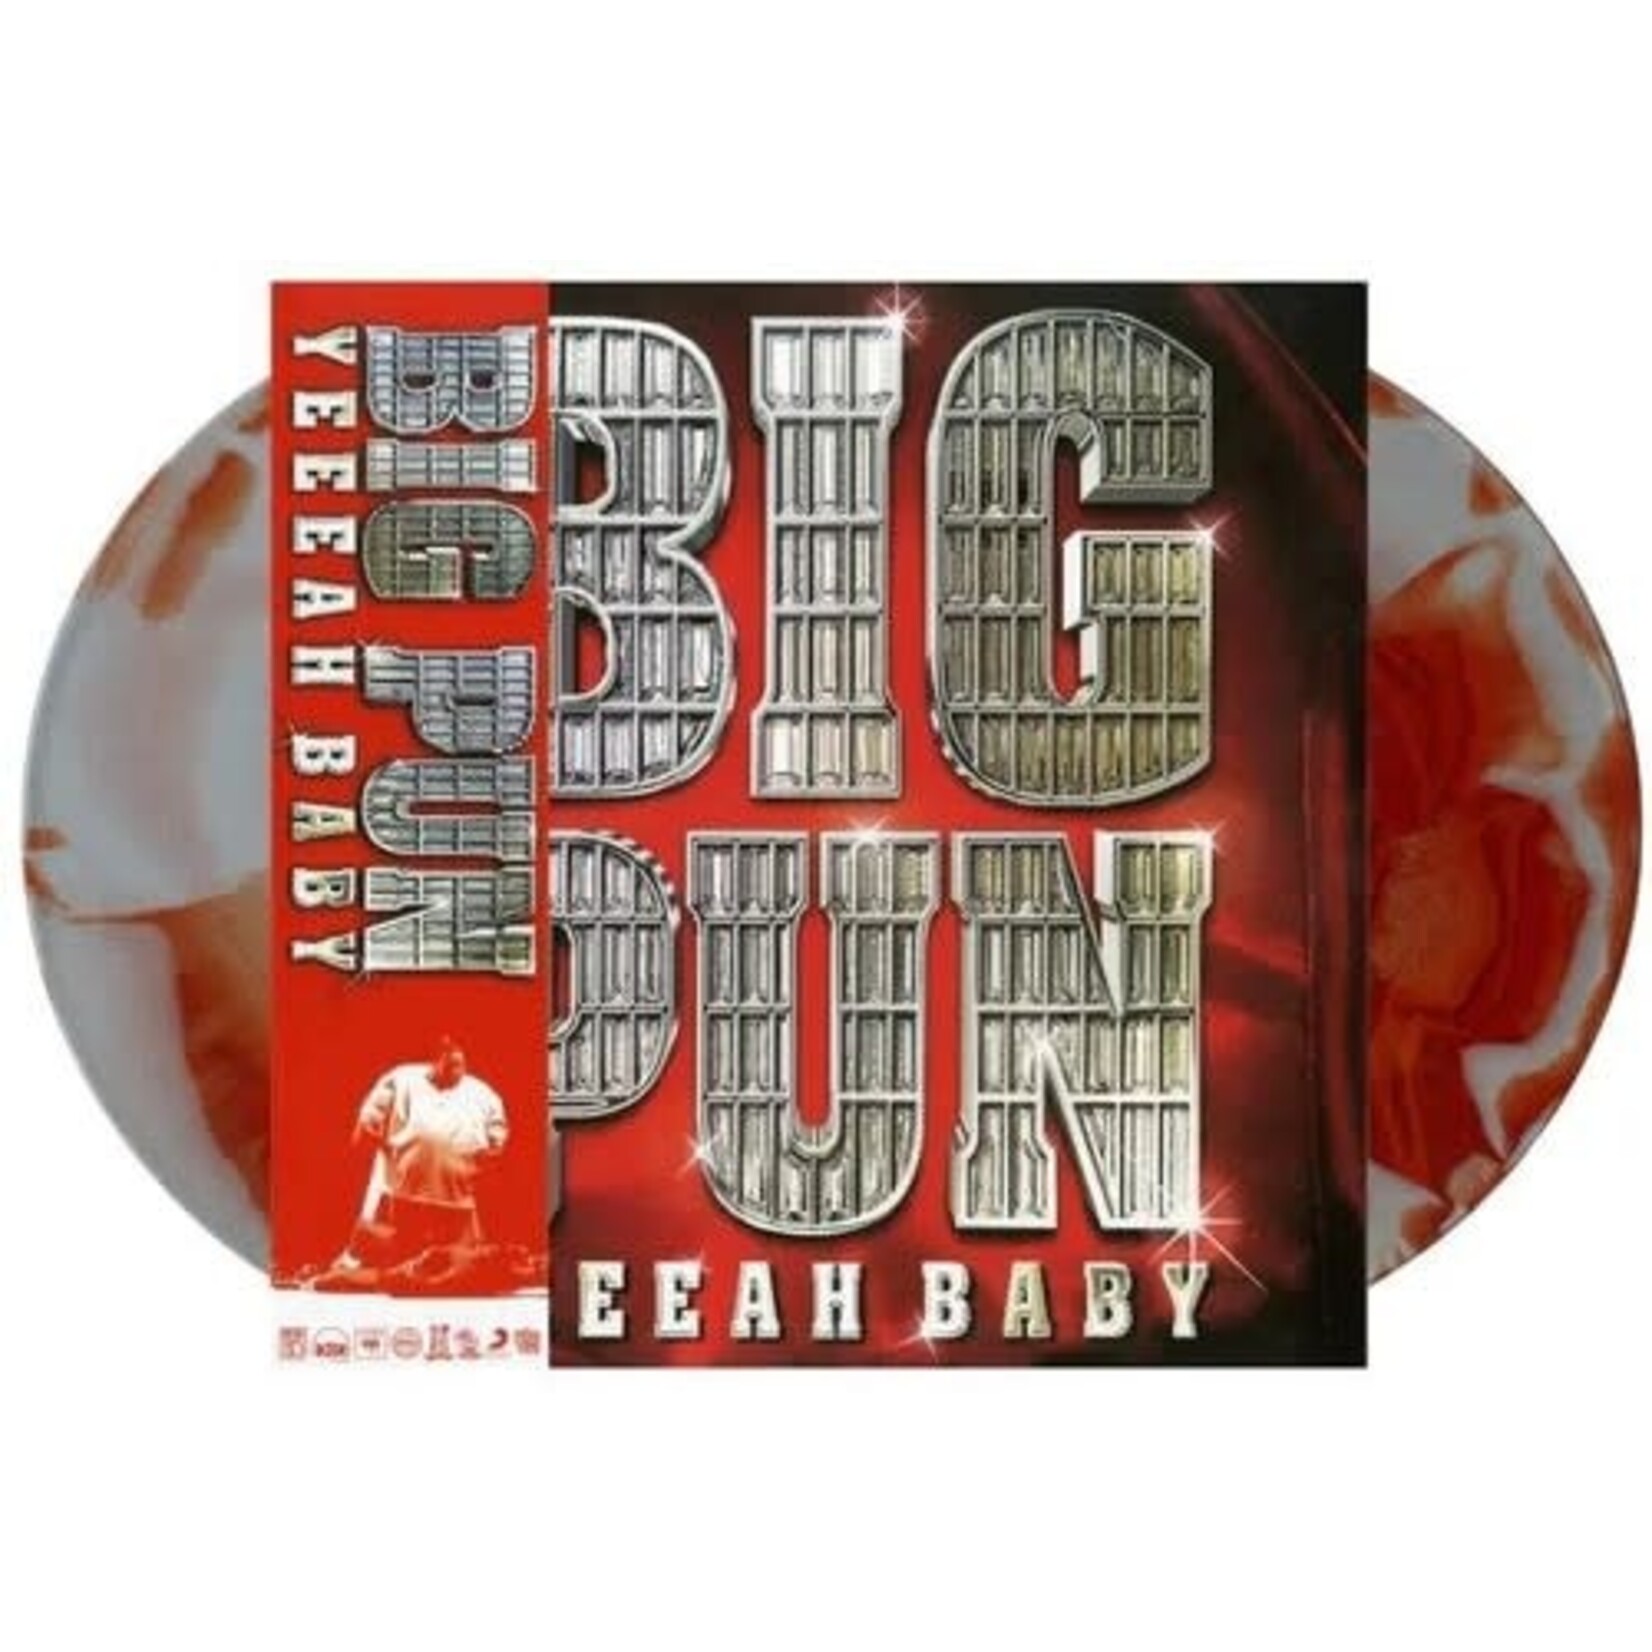 Get On Down Big Pun - Yeeeah Baby (2LP) [Color]